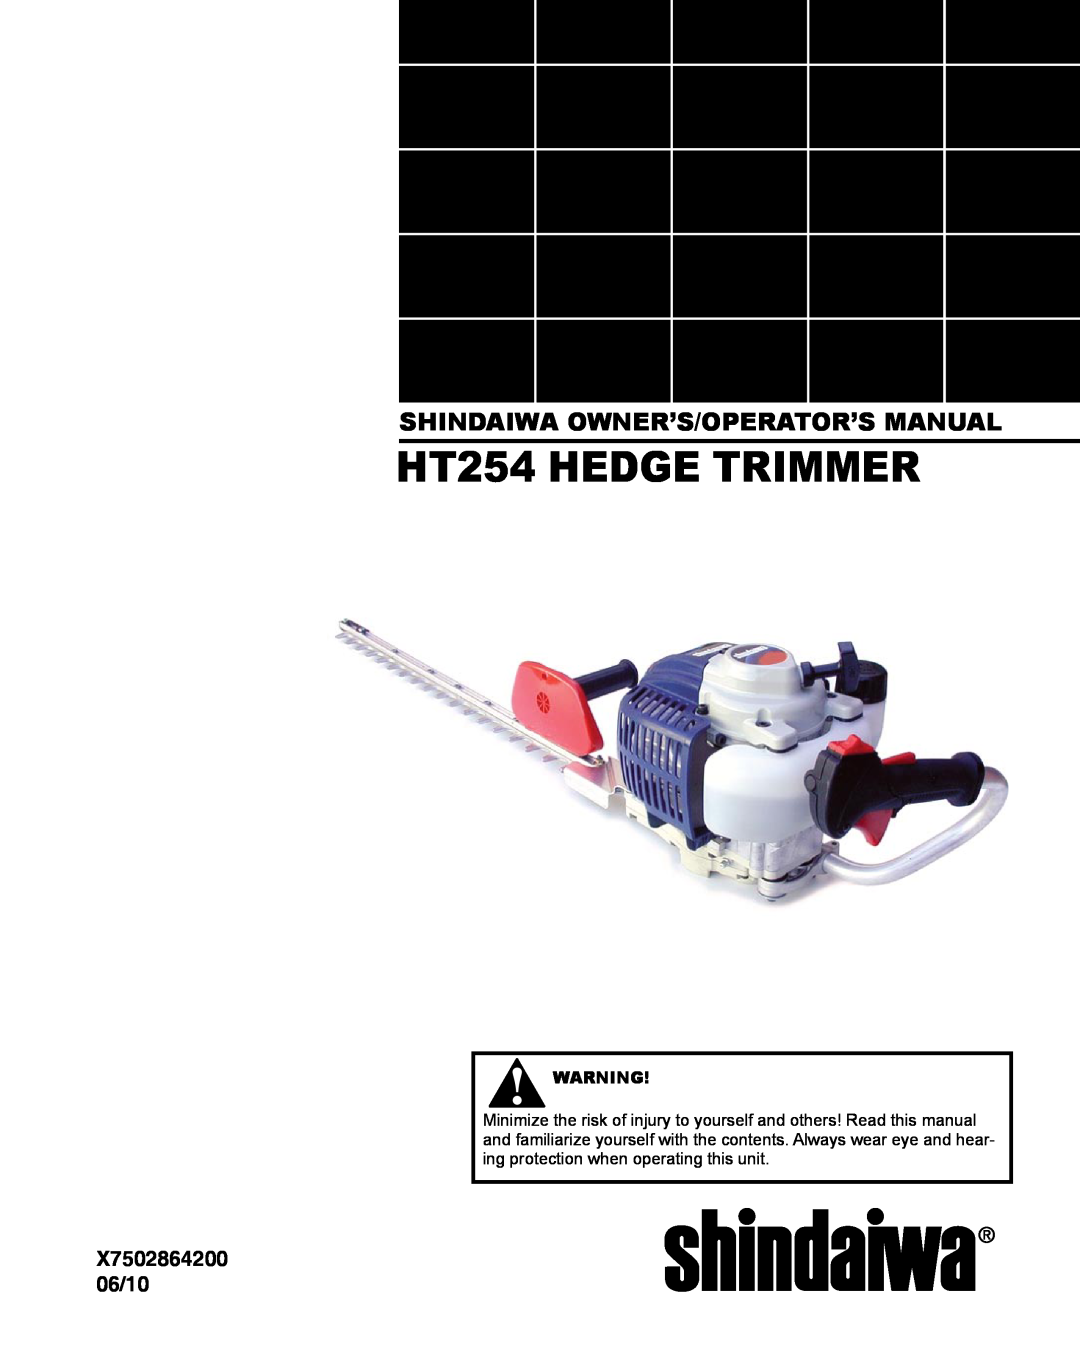 Shindaiwa HT254EF manual HT254 HEDGE TRIMMER, Shindaiwa Owner’S/Operator’S Manual, X7502864200 06/10 